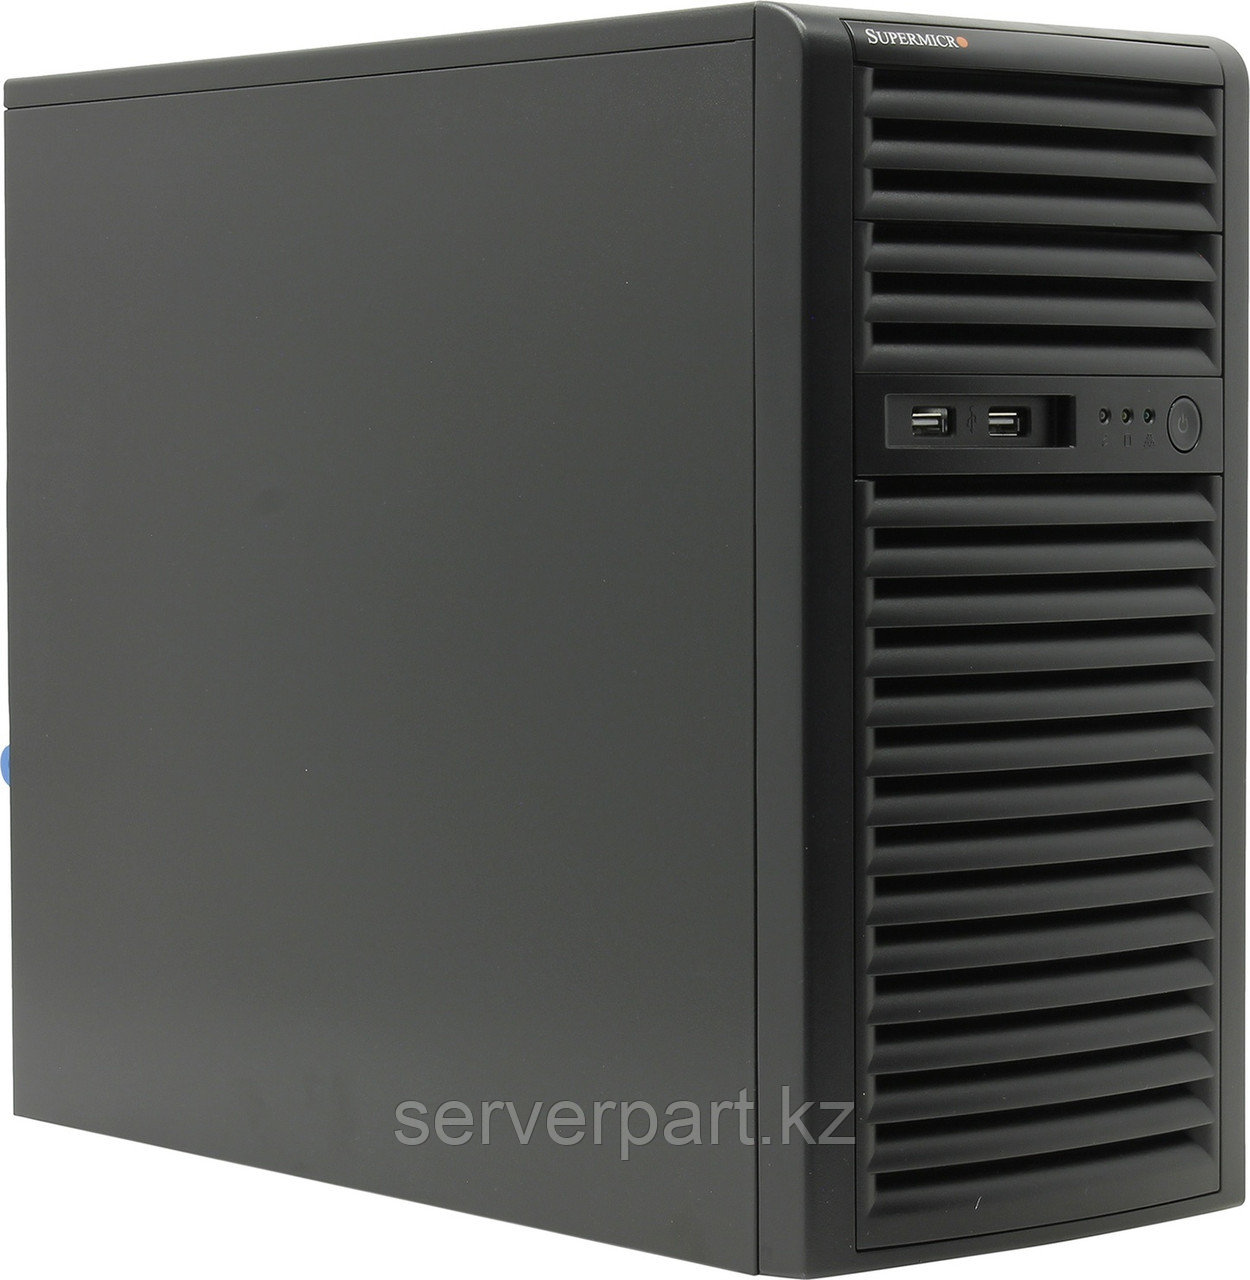 Сервер Supermicro 5039D Tower/4-core intel xeon E3-1220v6 3GHz/48GB UDIMM nECC/1x240GB SSD MU Hyb, фото 1